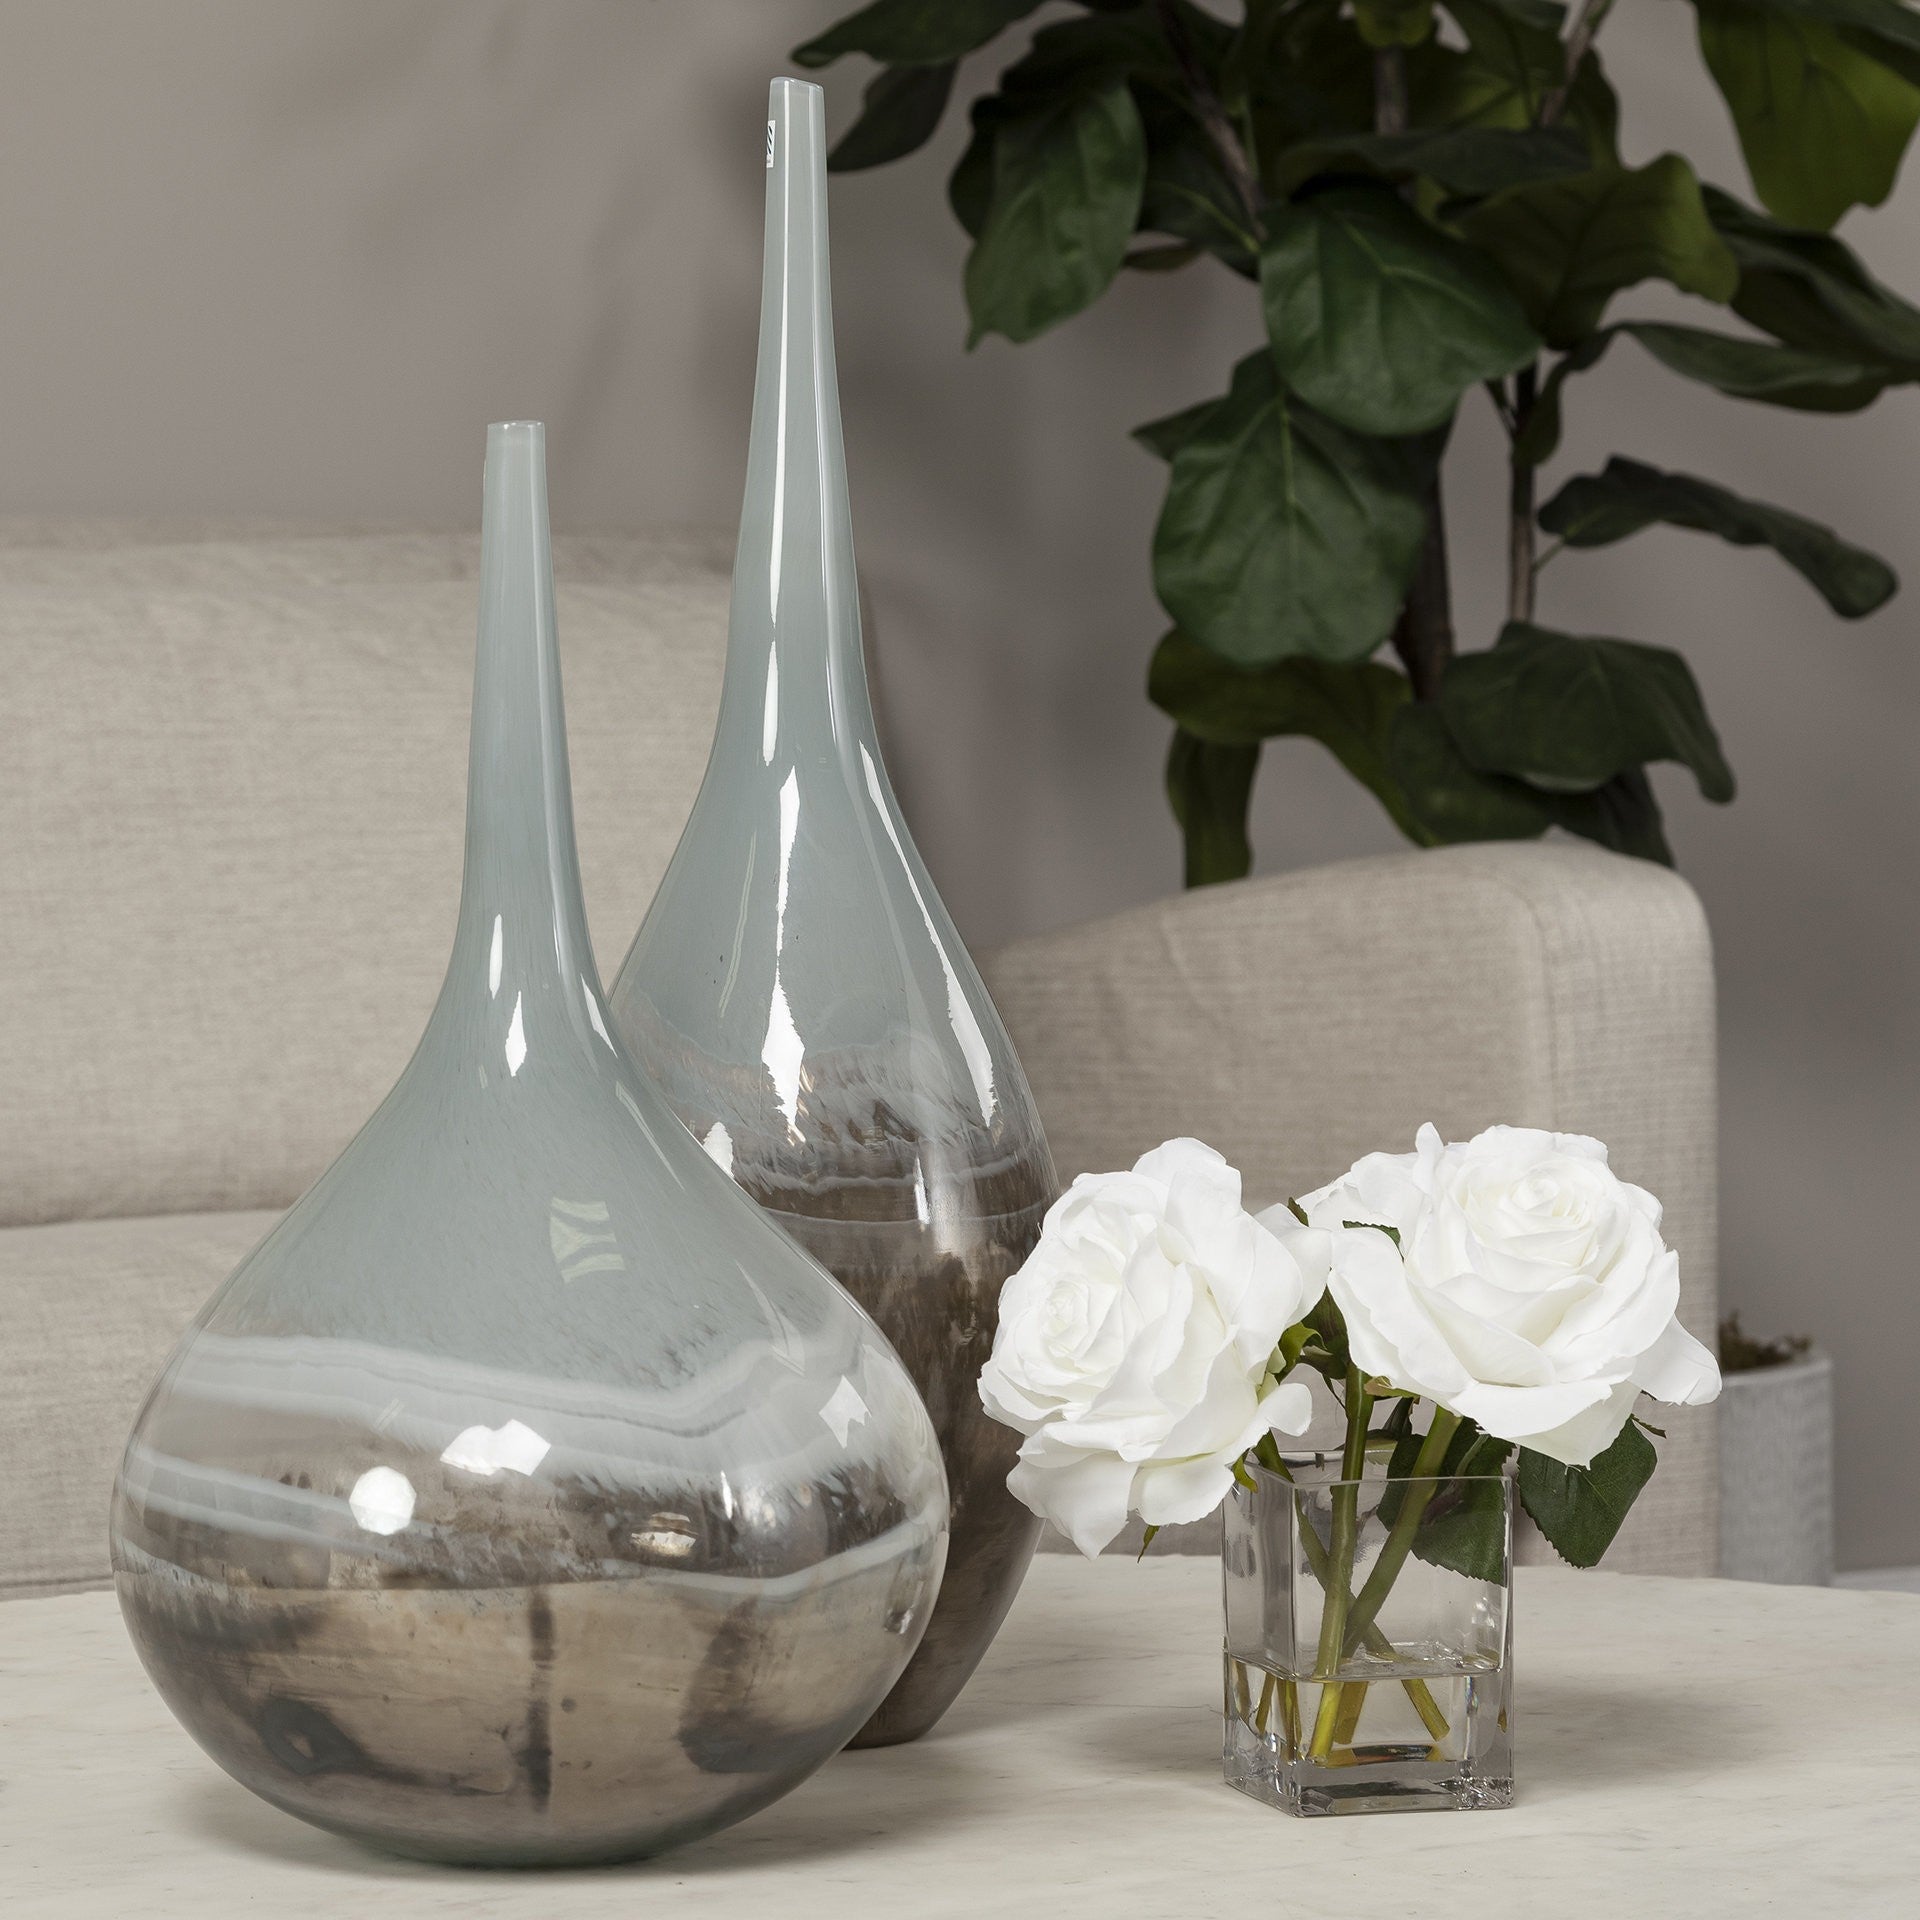 17" Blue Gray and Taupe Handblown Spun Glass Vase